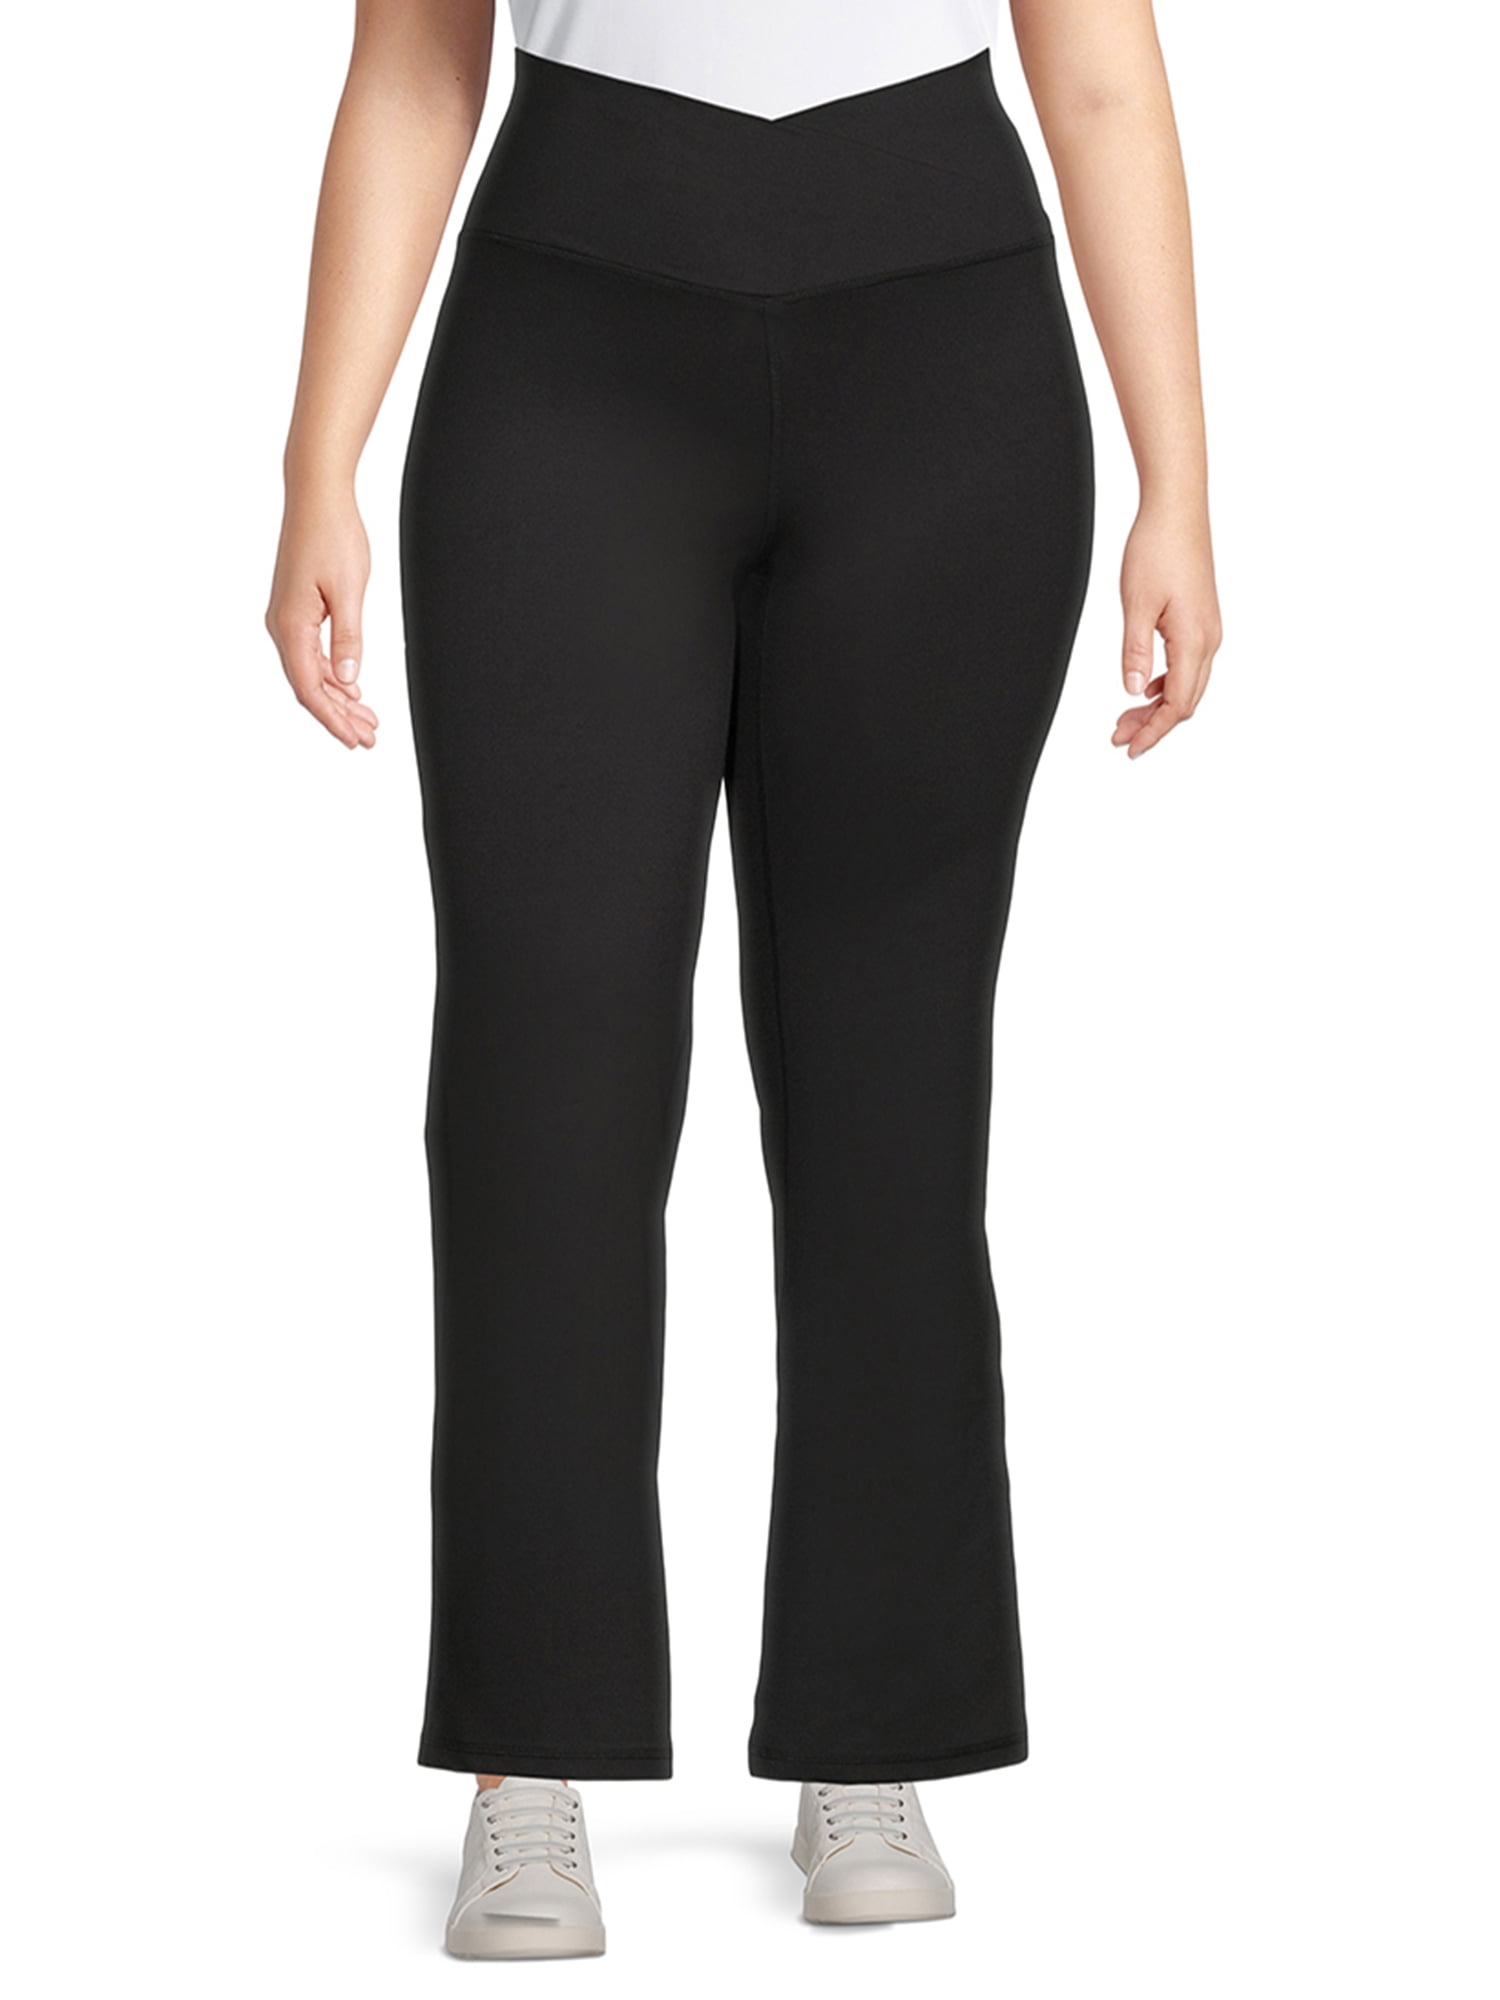 Avia Women's Plus Size Crossover Waist Flare Yoga Pants - Walmart.com